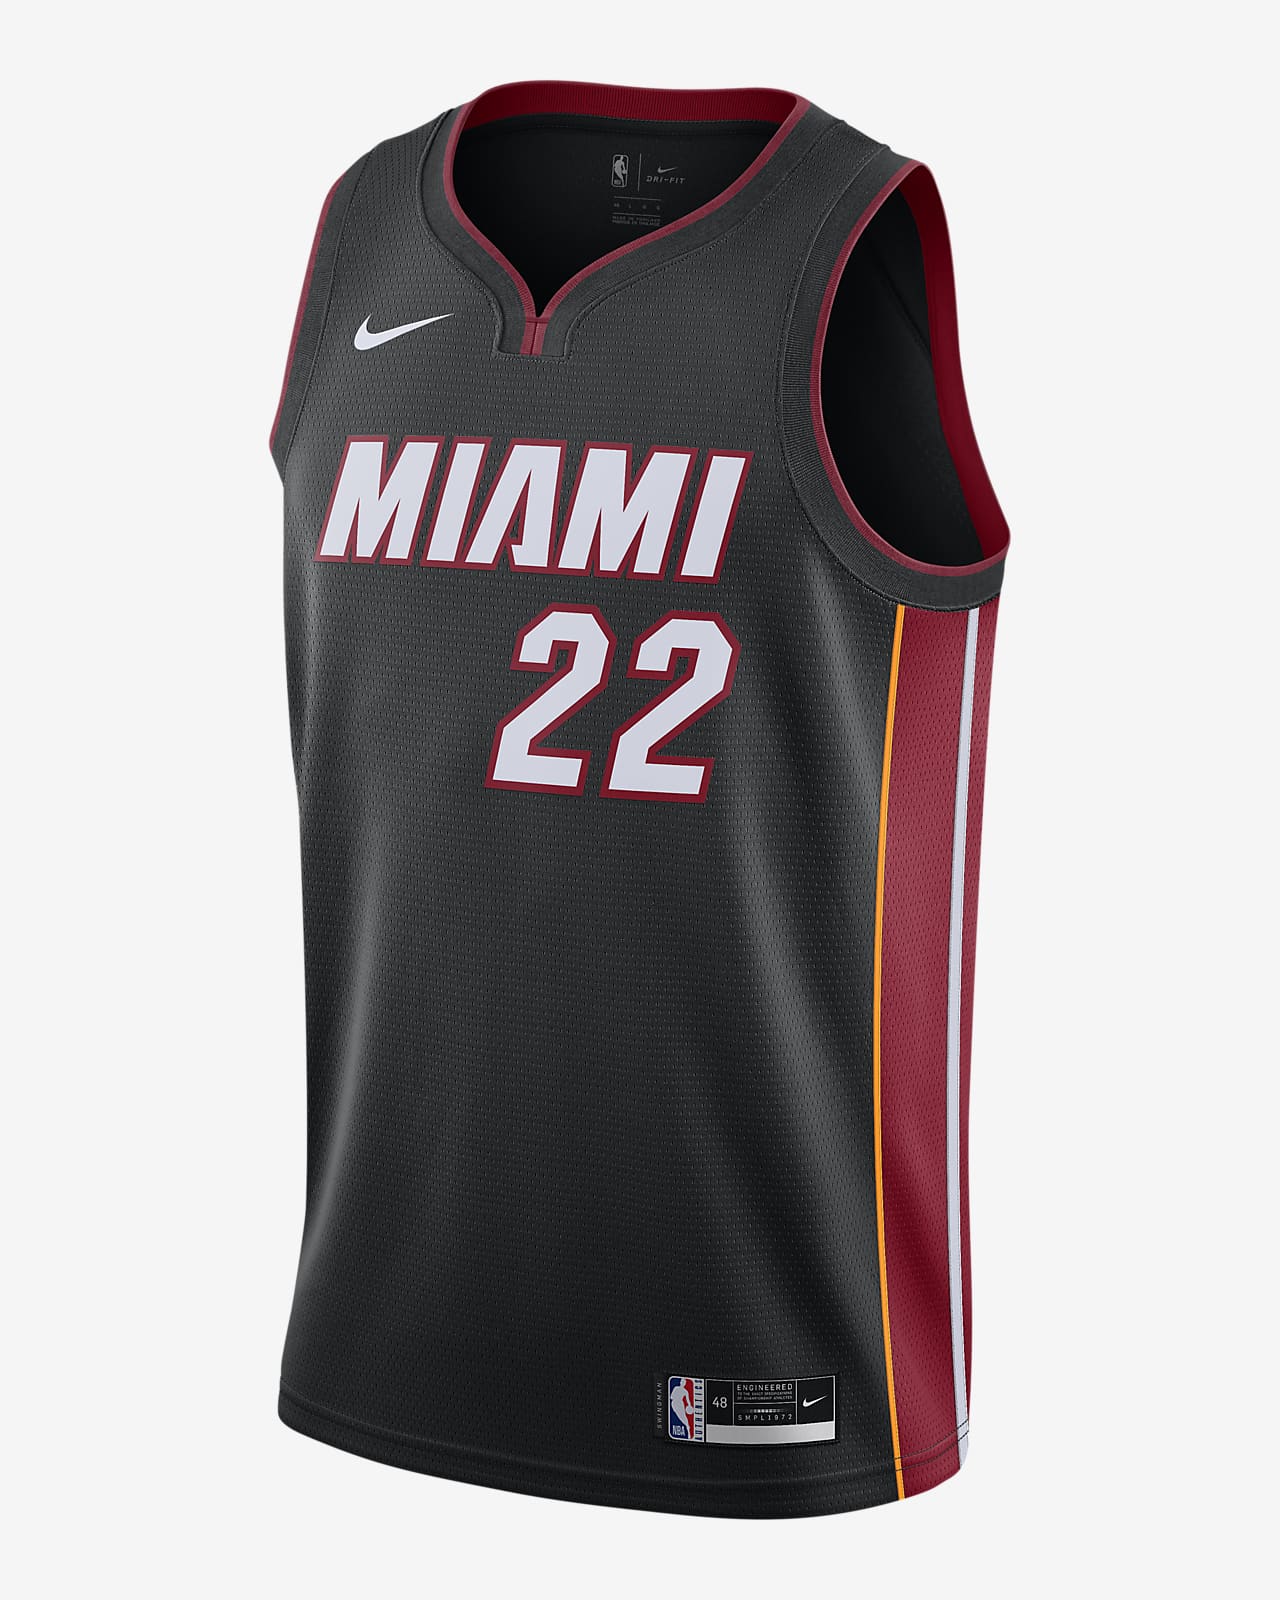 Edition 2020 Nike NBA Swingman Jersey 